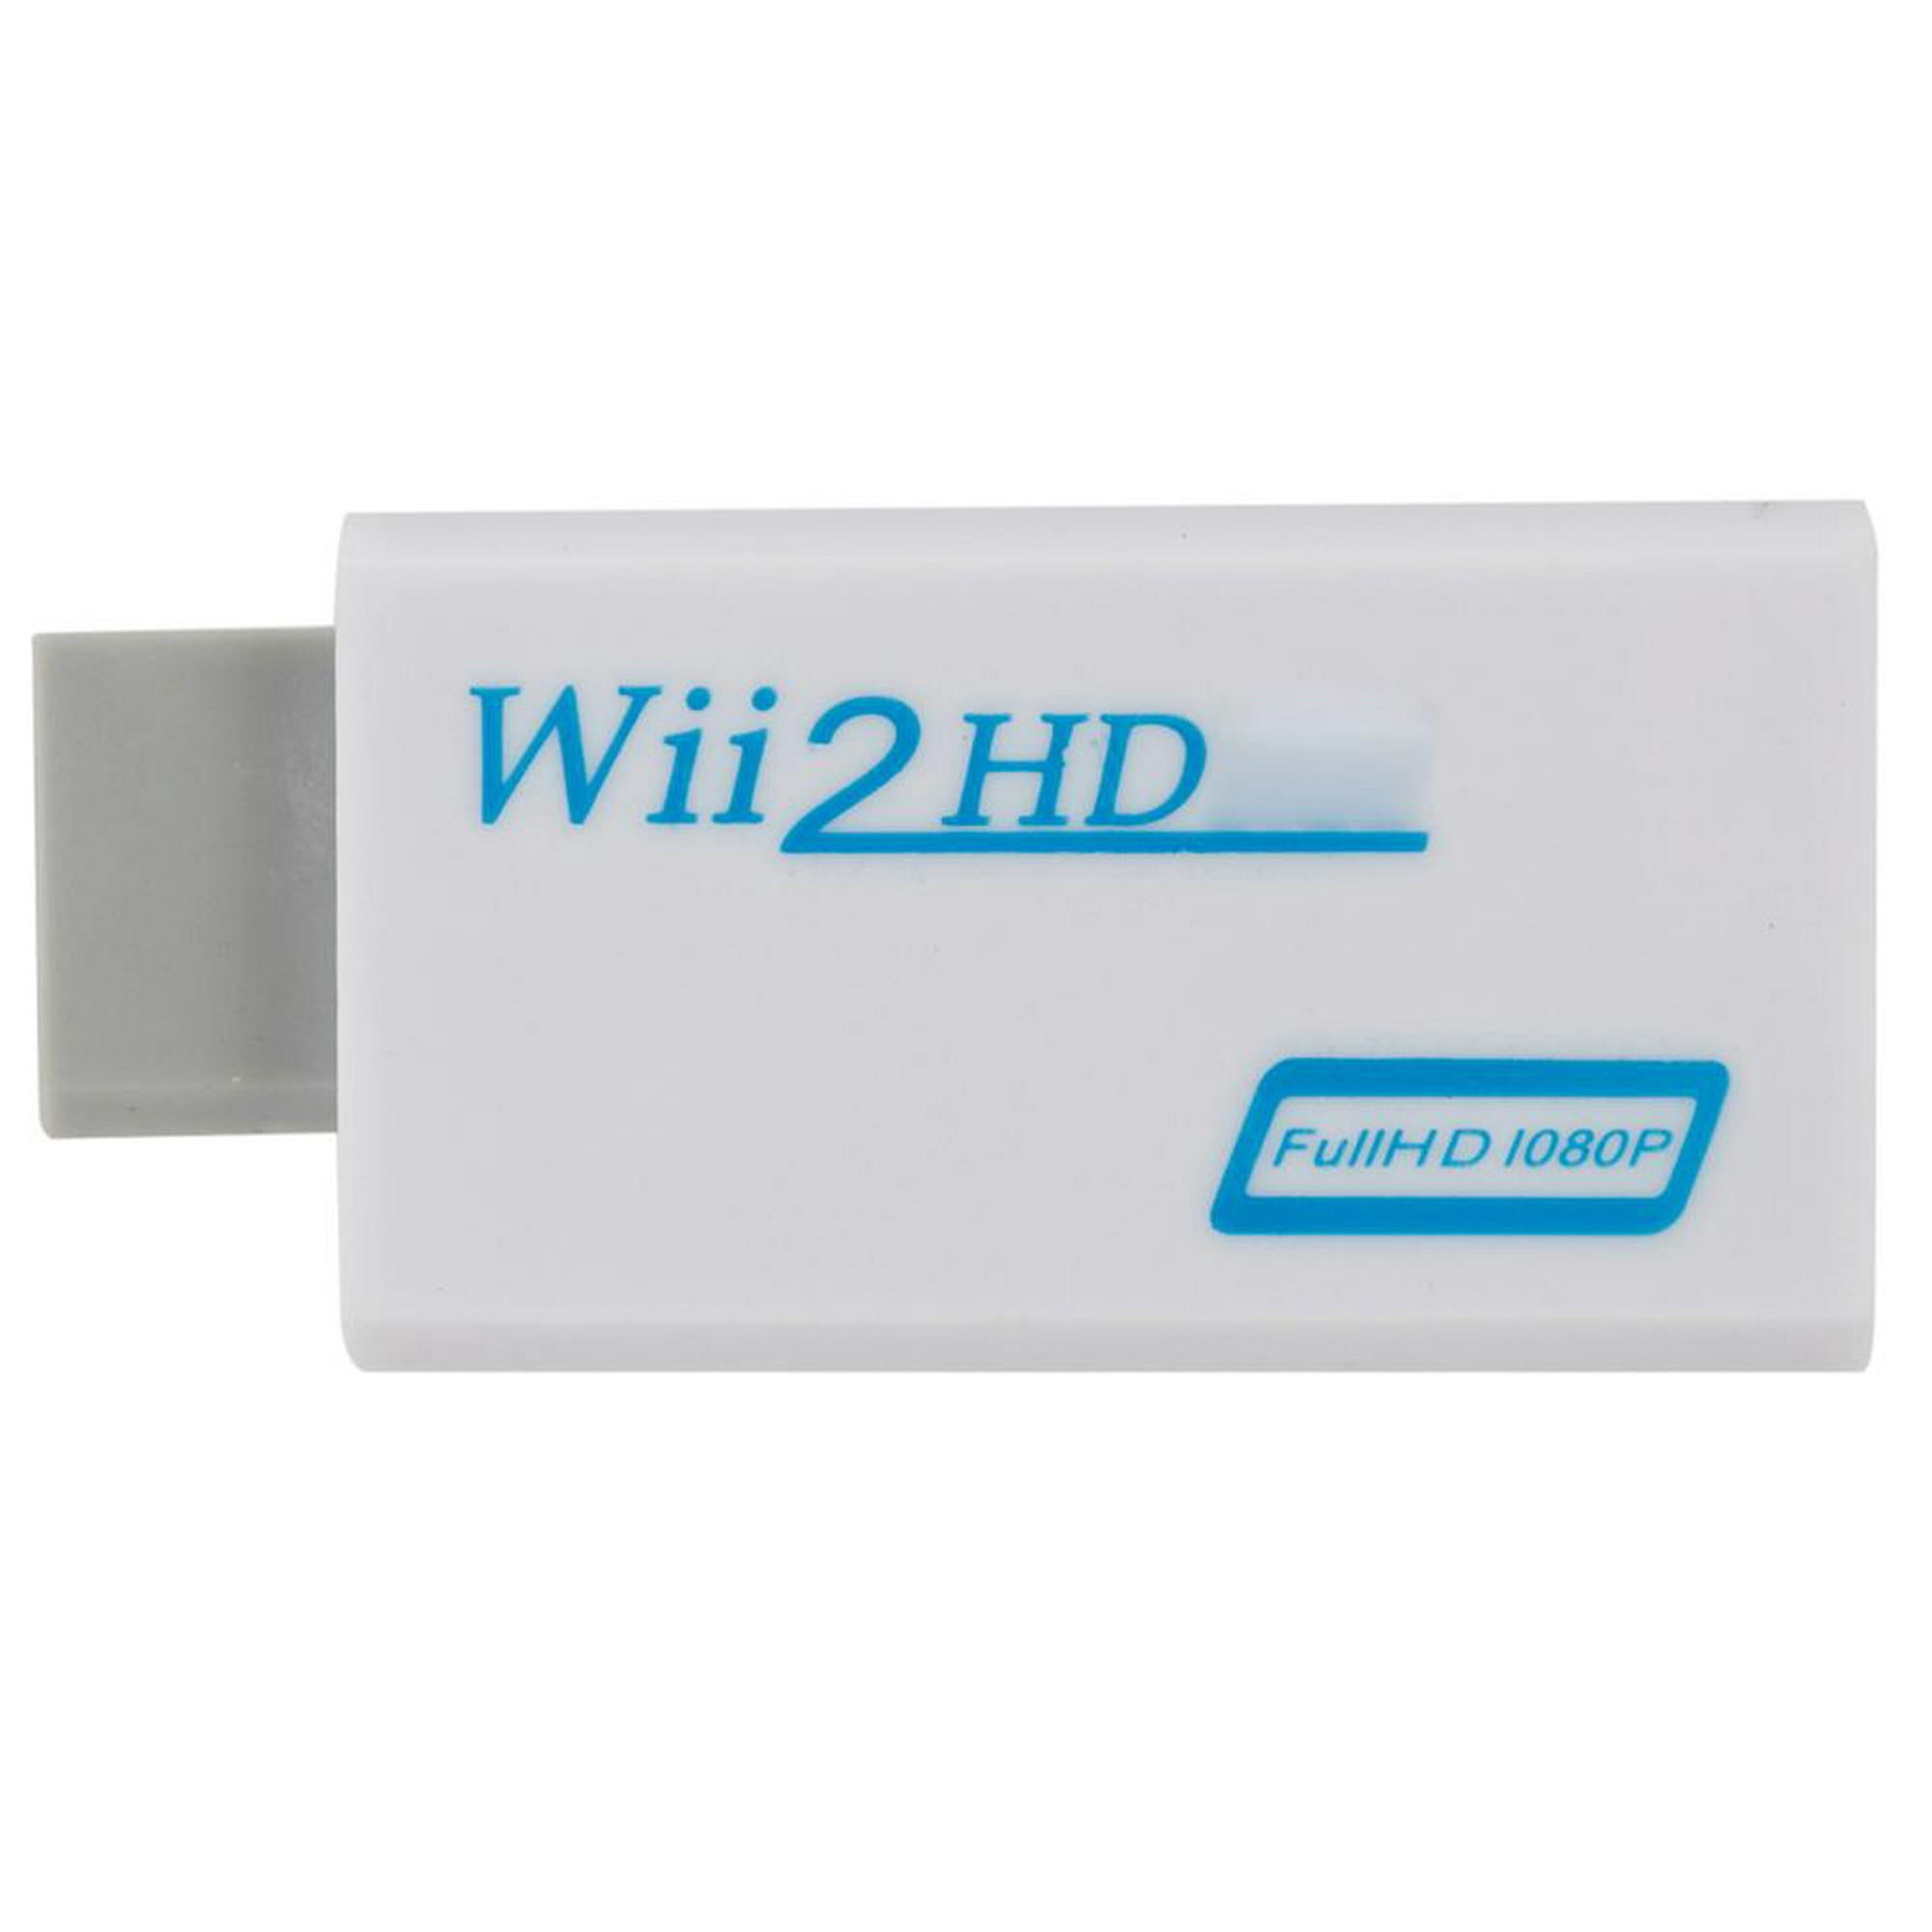 Adaptador convertidor Full HD 1080P compatible con Wii a HDMI